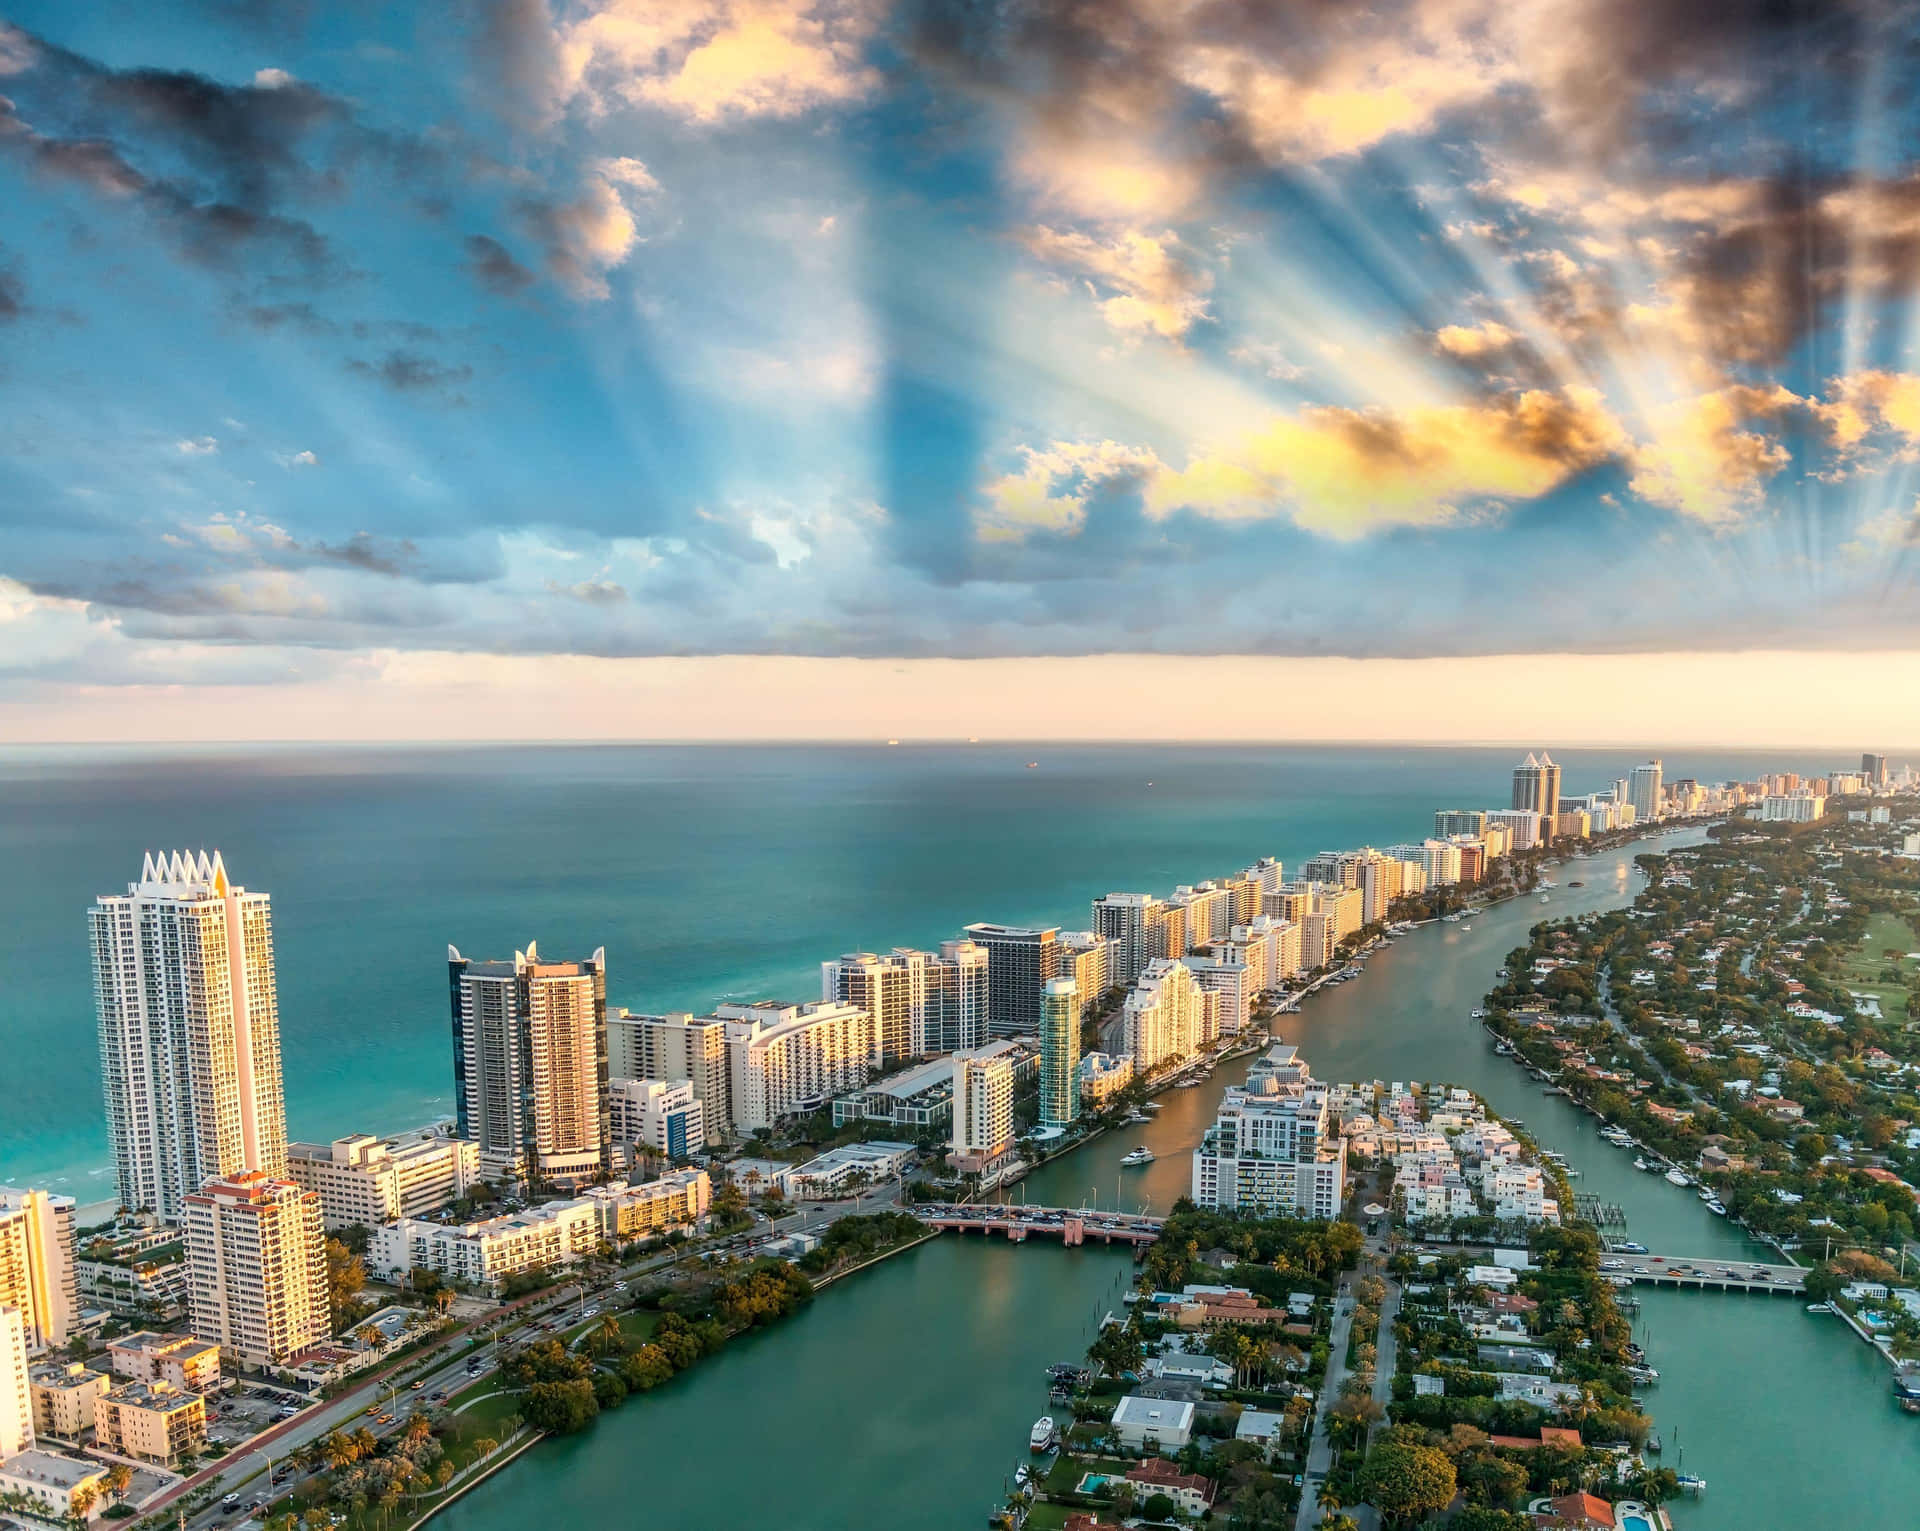 View of the beautiful Miami skyline